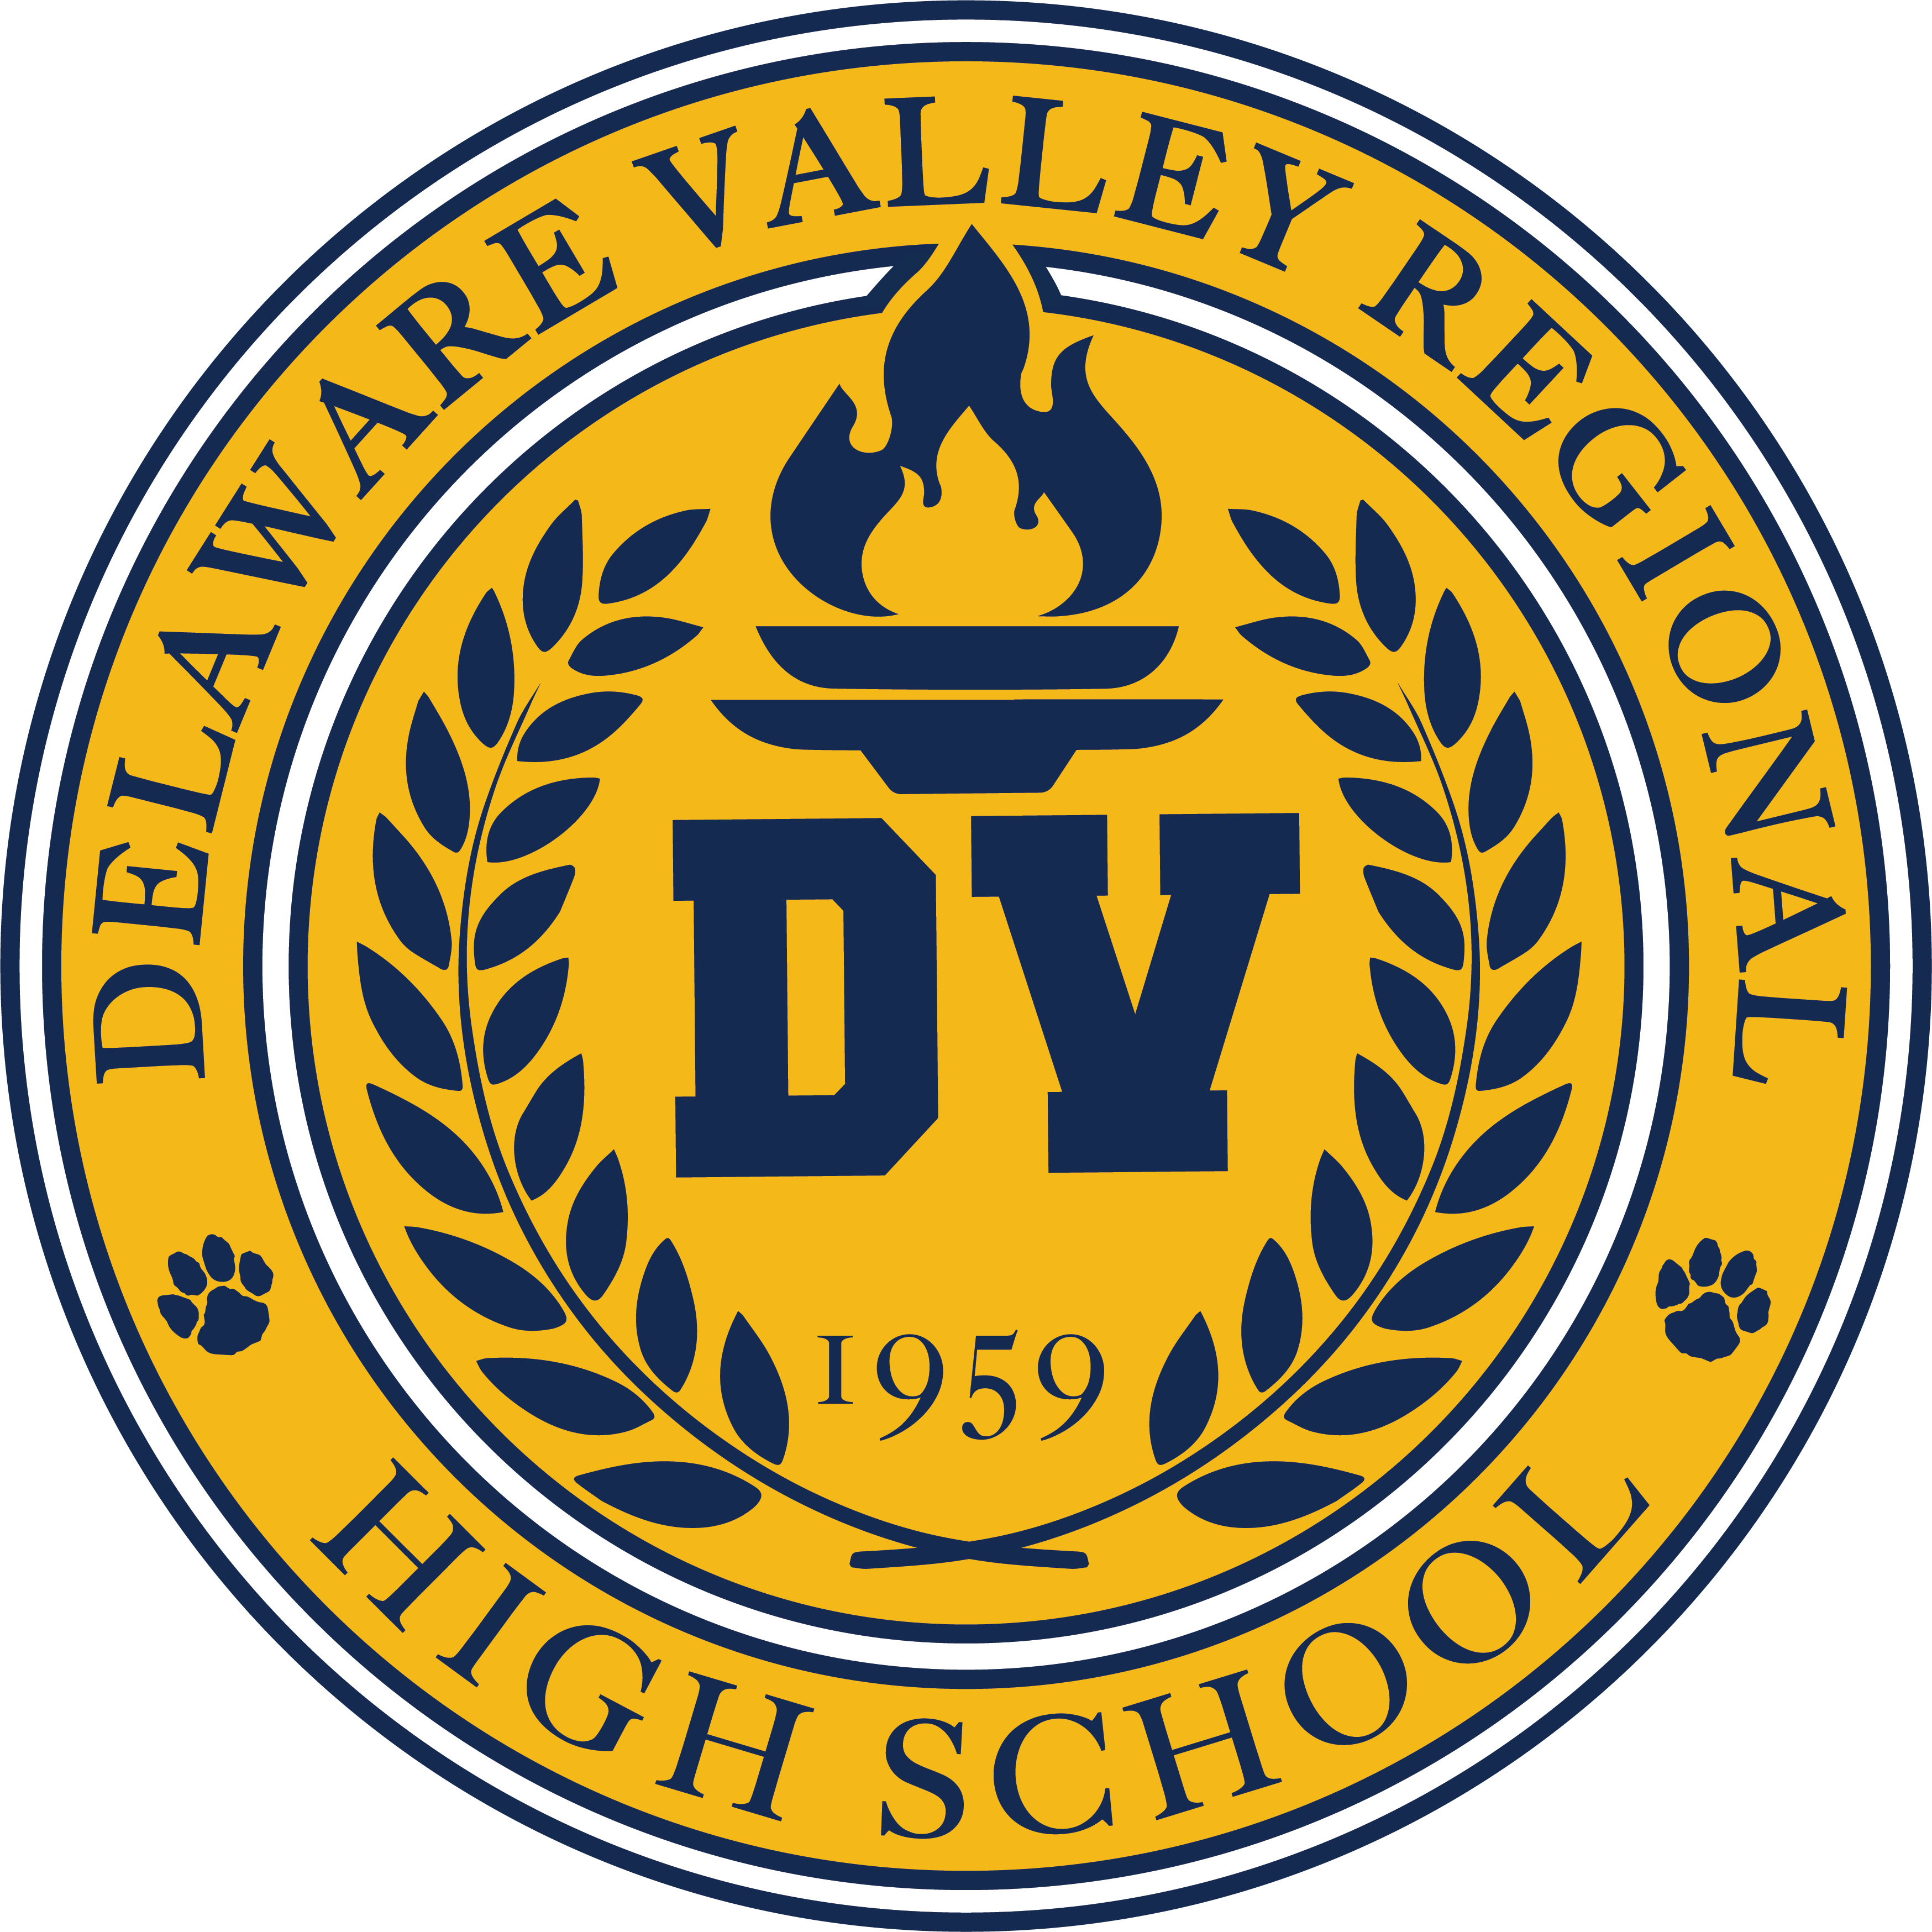 Delaware Valley Regional High School